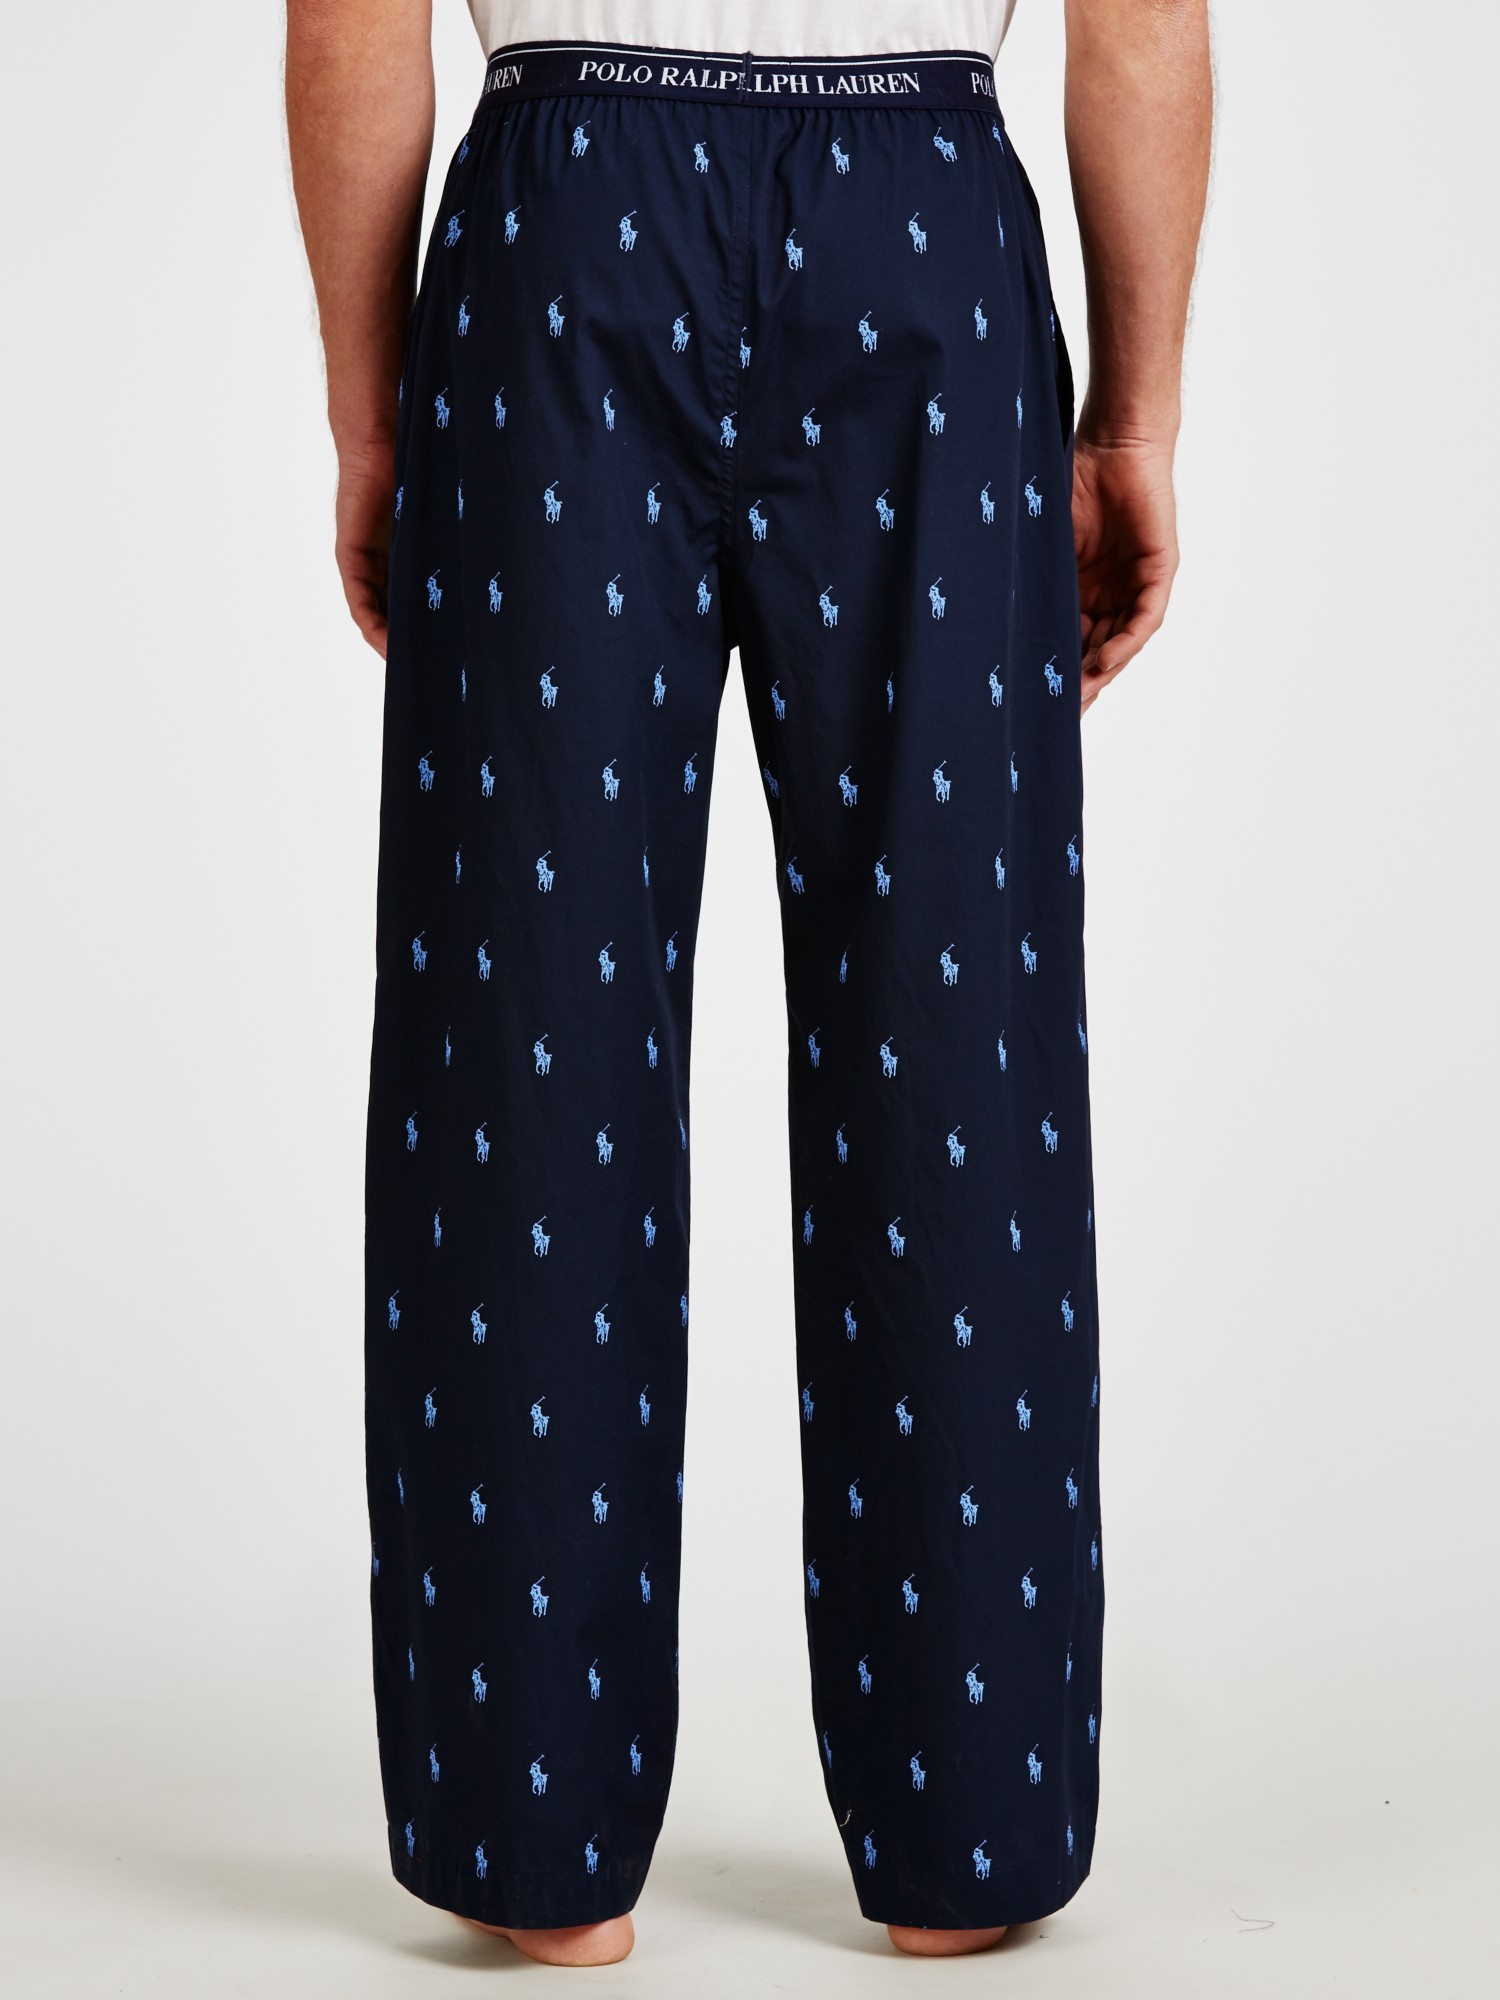 Polo Ralph Lauren Pony Print Lounge Pants in Navy (Blue) for Men - Lyst